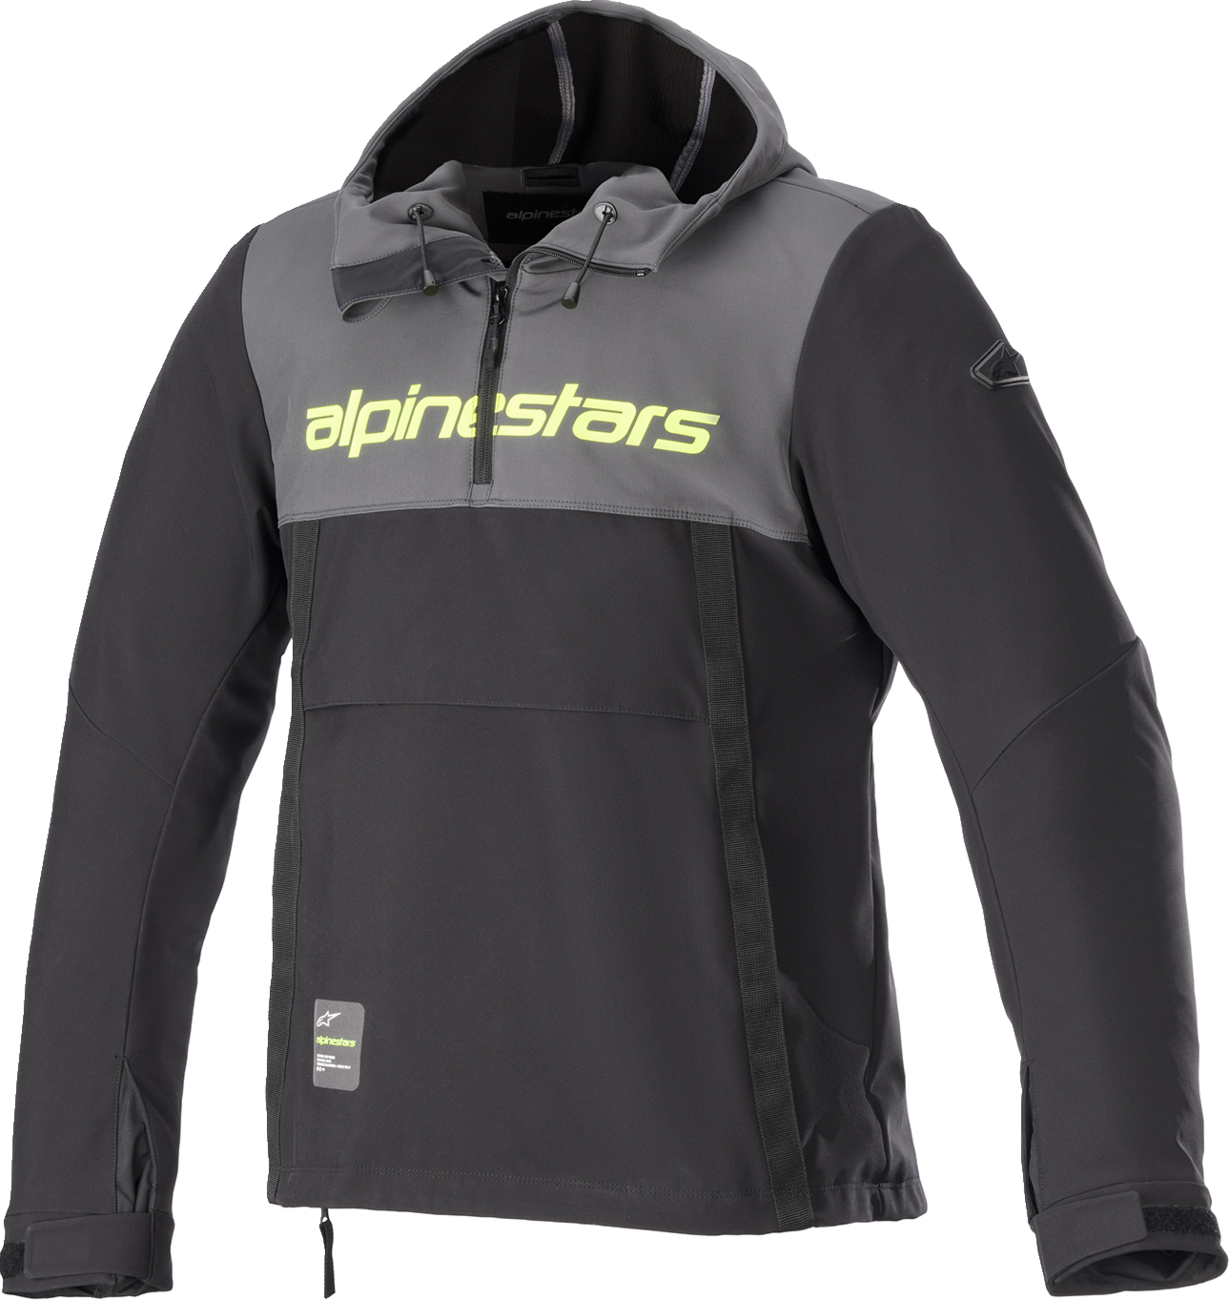 ALPINESTARS Sherpa Jacket - Black/Gray/Yellow - Small 4208123-9151-S